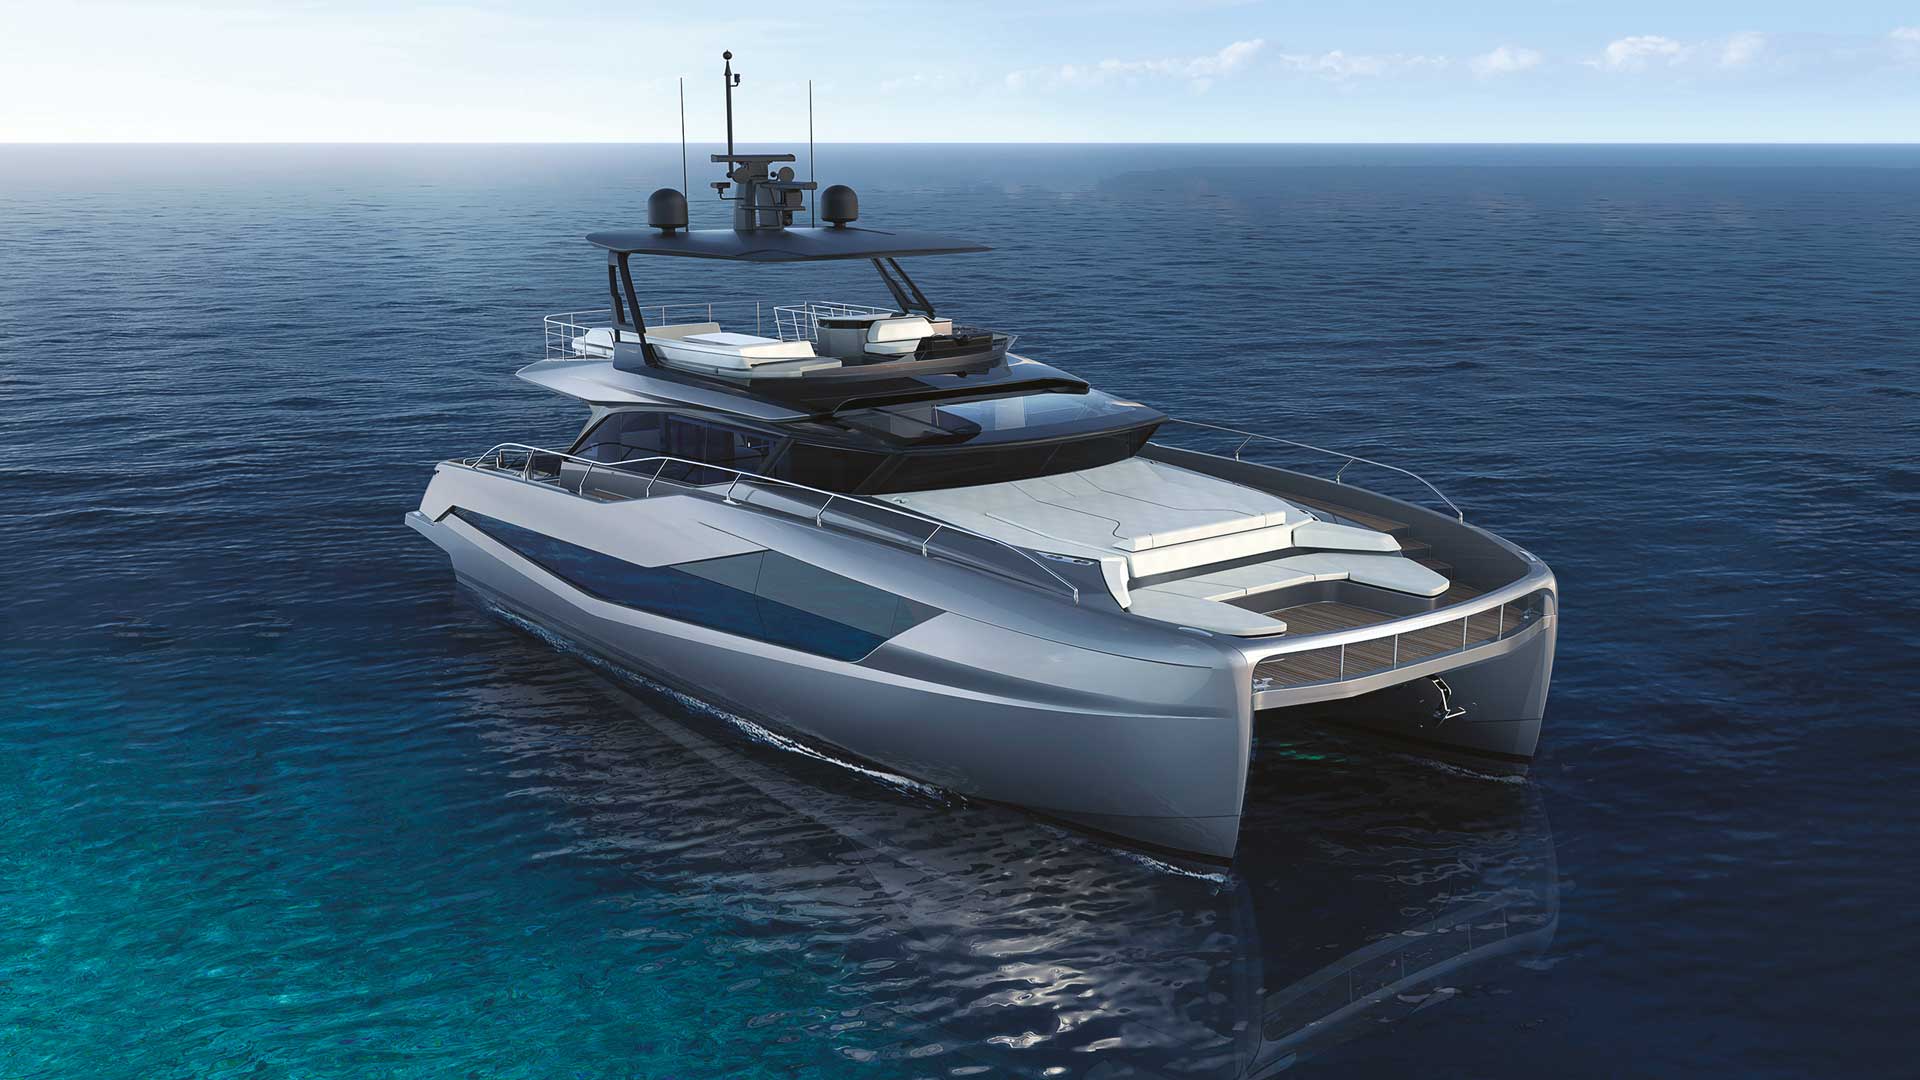 Austin-Parker-yacht-nuovo-catamarano-robb-report-italia